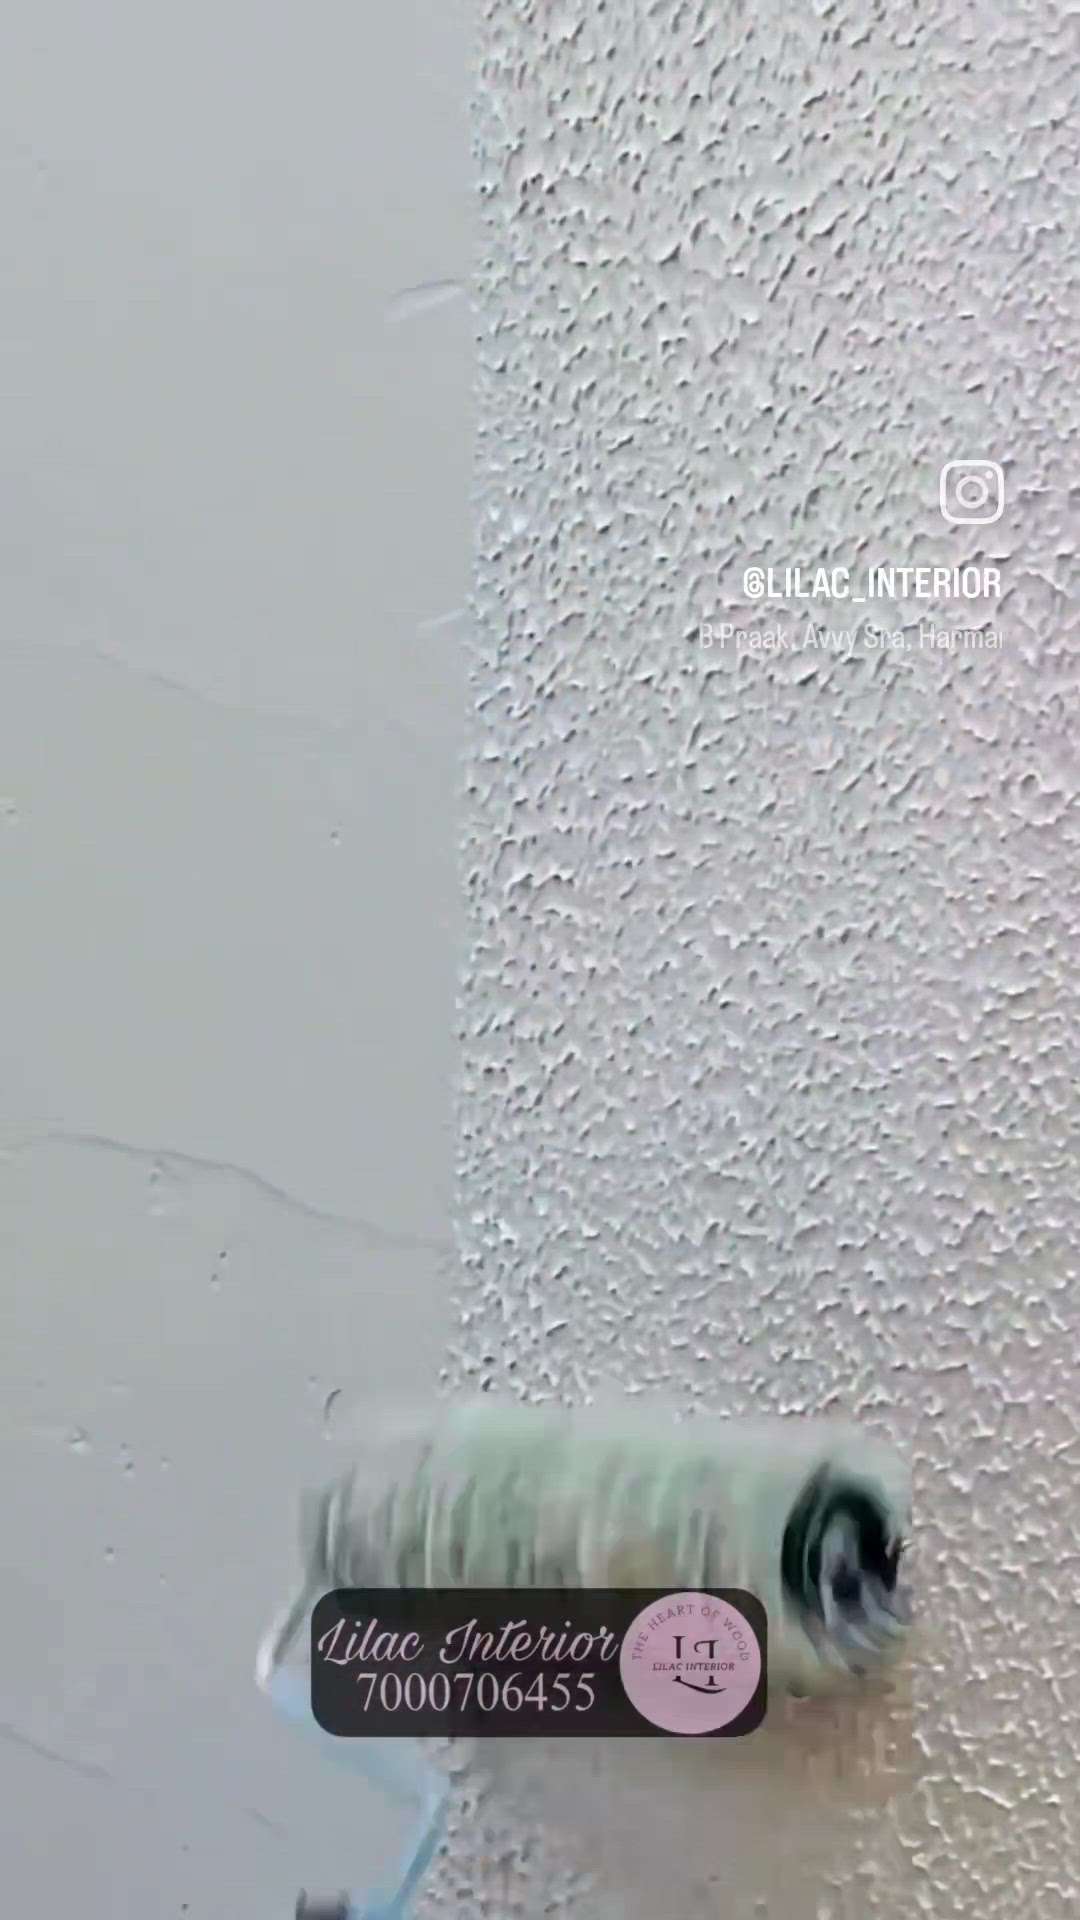 Wall decor by Lilac Interior 😍🤩
.
.
.
#wallcoverings
#wallpanellingideas
#walldesign #wallpanel
#walldecoration #wallart #wallpainting
#wallartdecor #wallputty #wallputtycraft #wallcraft #wallhanging #wallsticker #wallsculpture #painthouse
#noida #noidainterior #noidaproject #delhincr #Delhihome #designerinteriores #designinterior #trendingreelsvideo #reelsinsta #instahome #instagram #instaart #wallpanneling